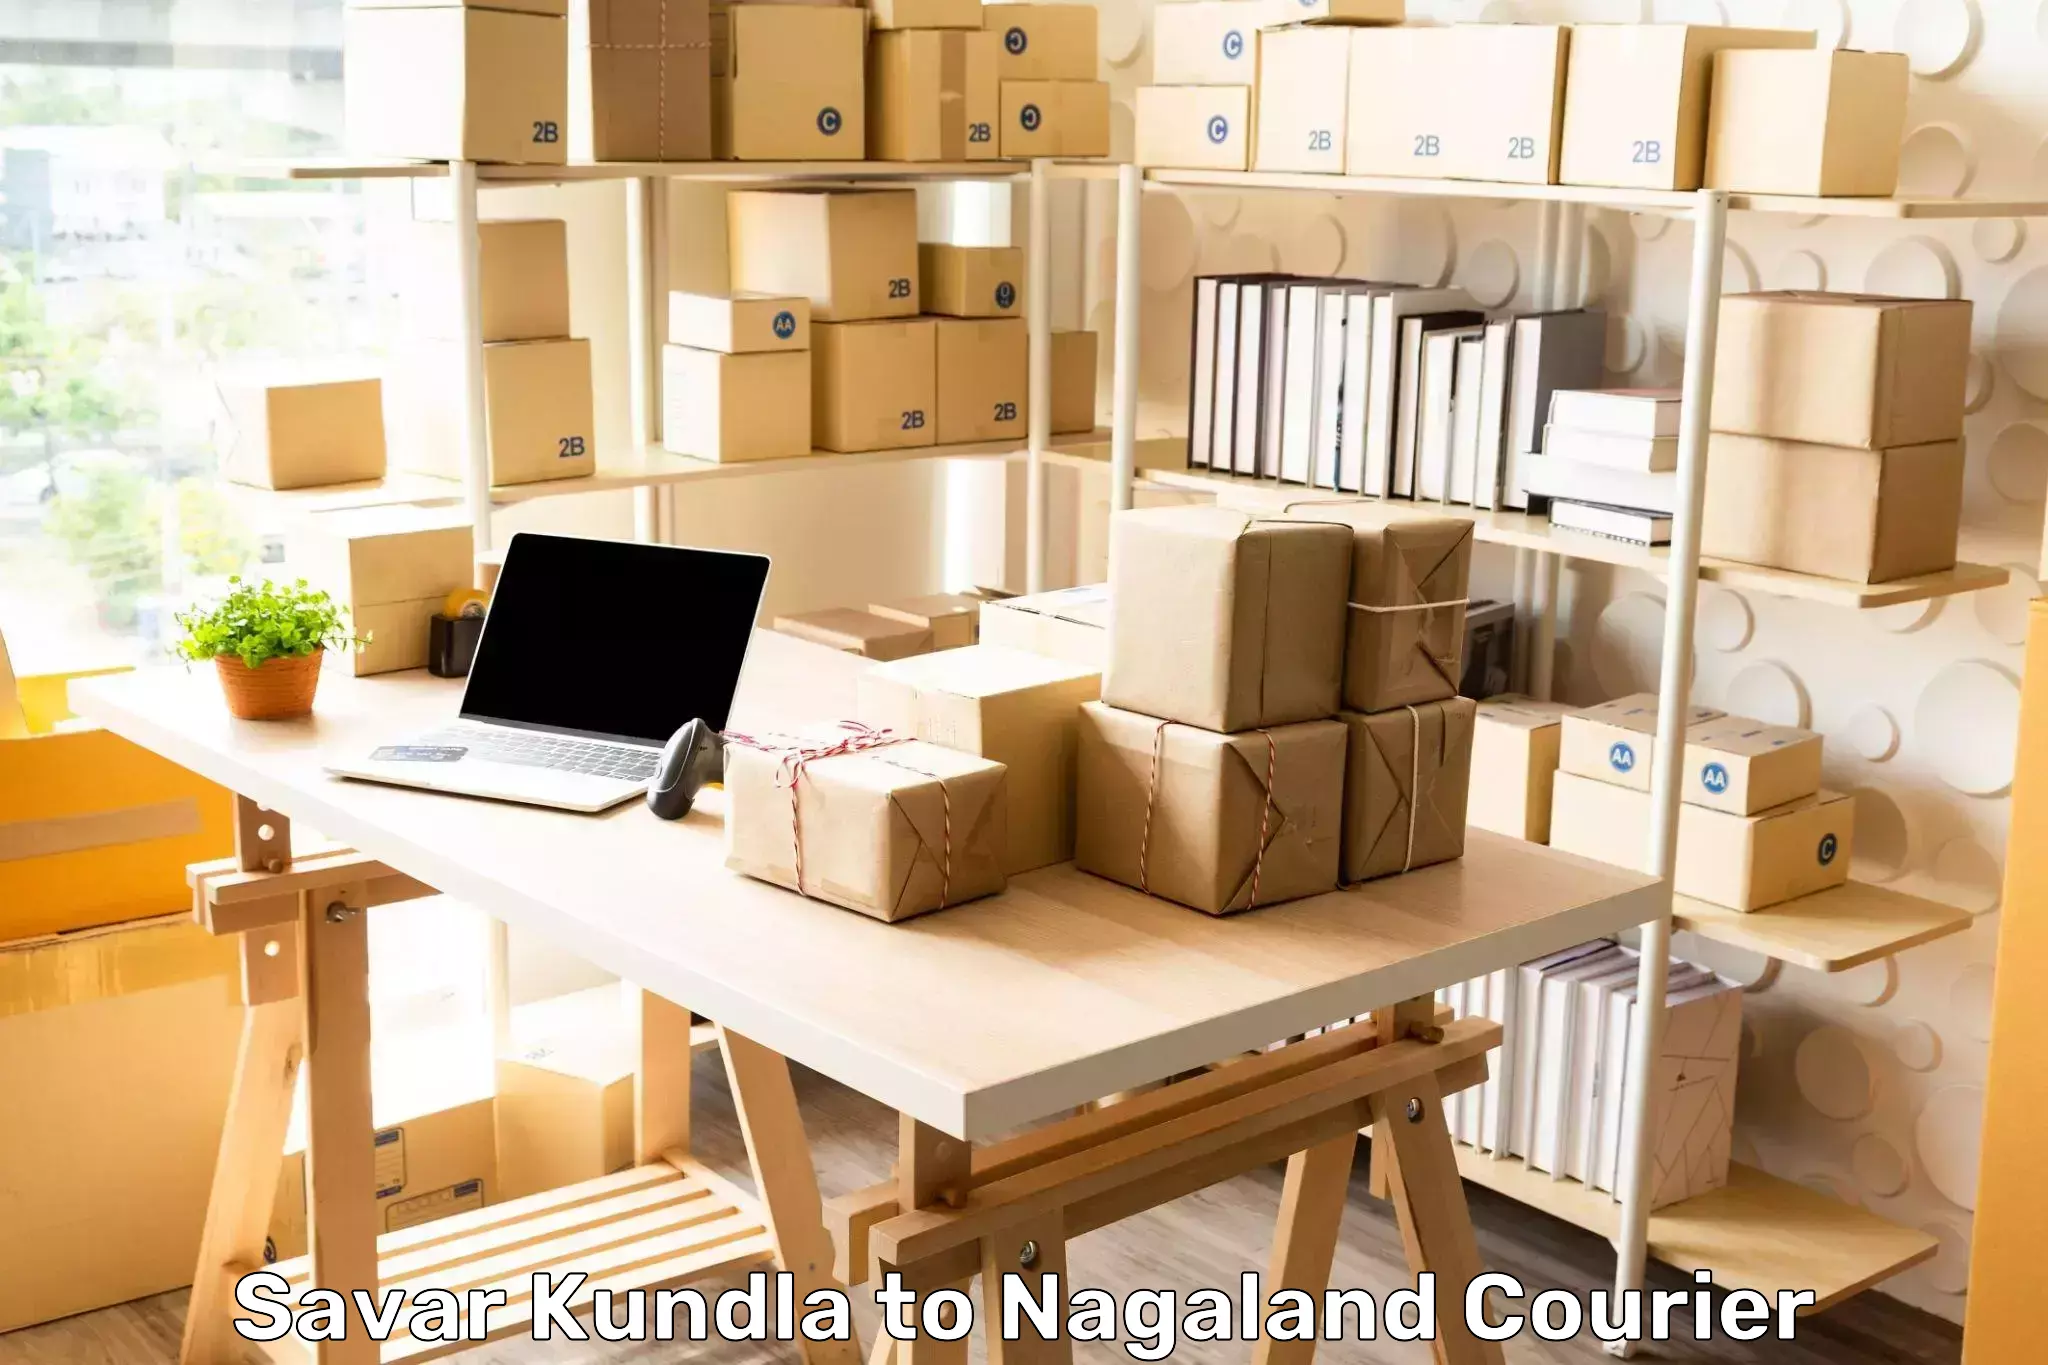 Global shipping networks Savar Kundla to Nagaland